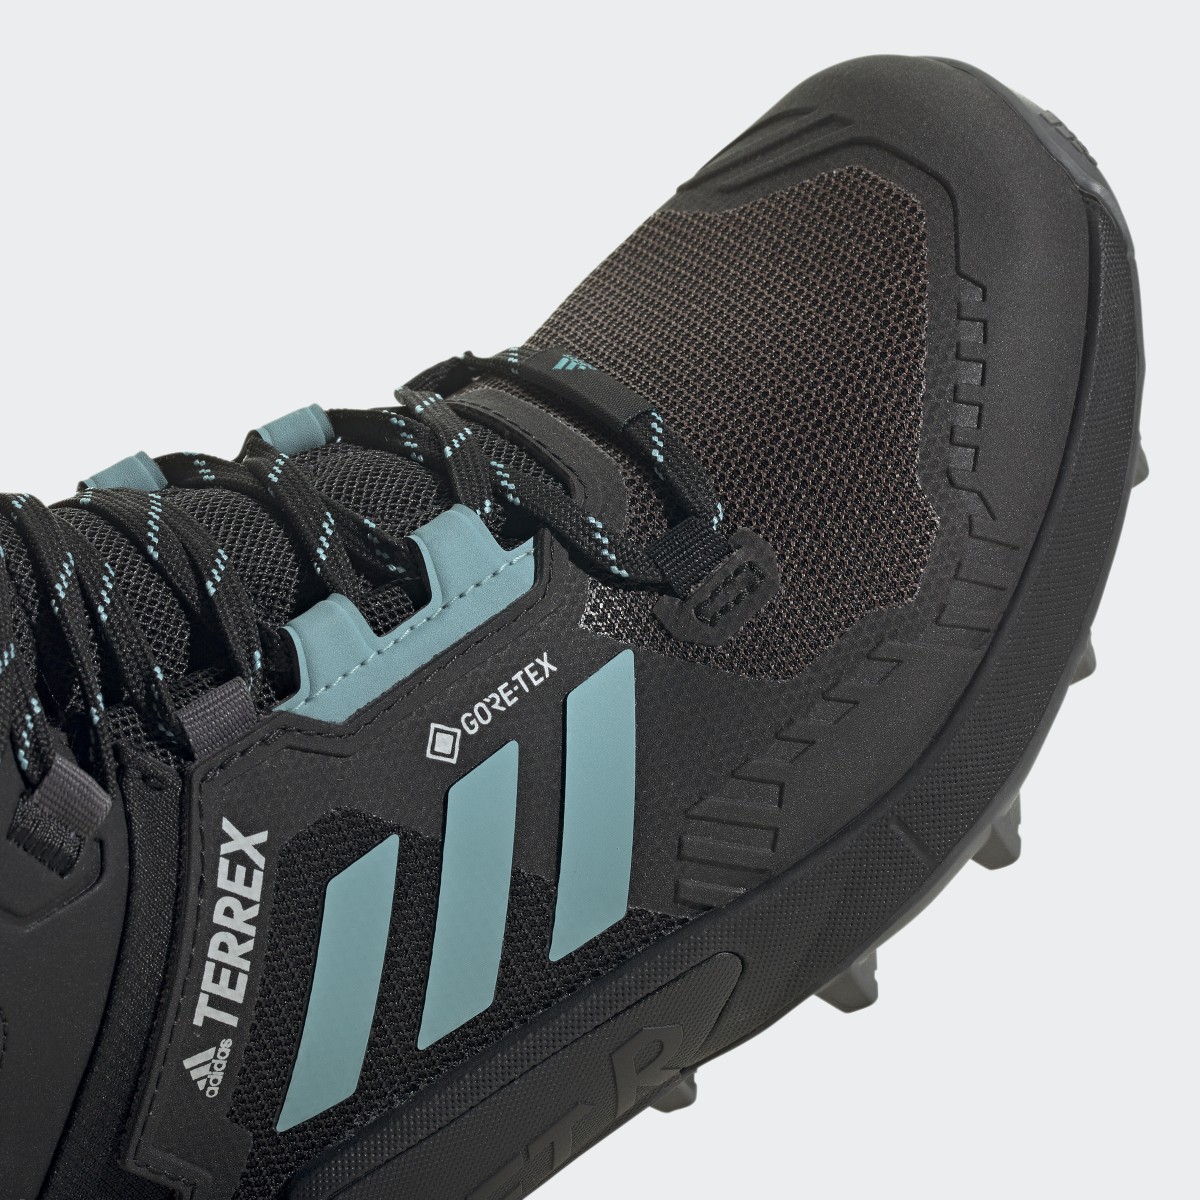 Adidas Terrex Swift R3 Mid GORE-TEX Hiking Shoes. 10